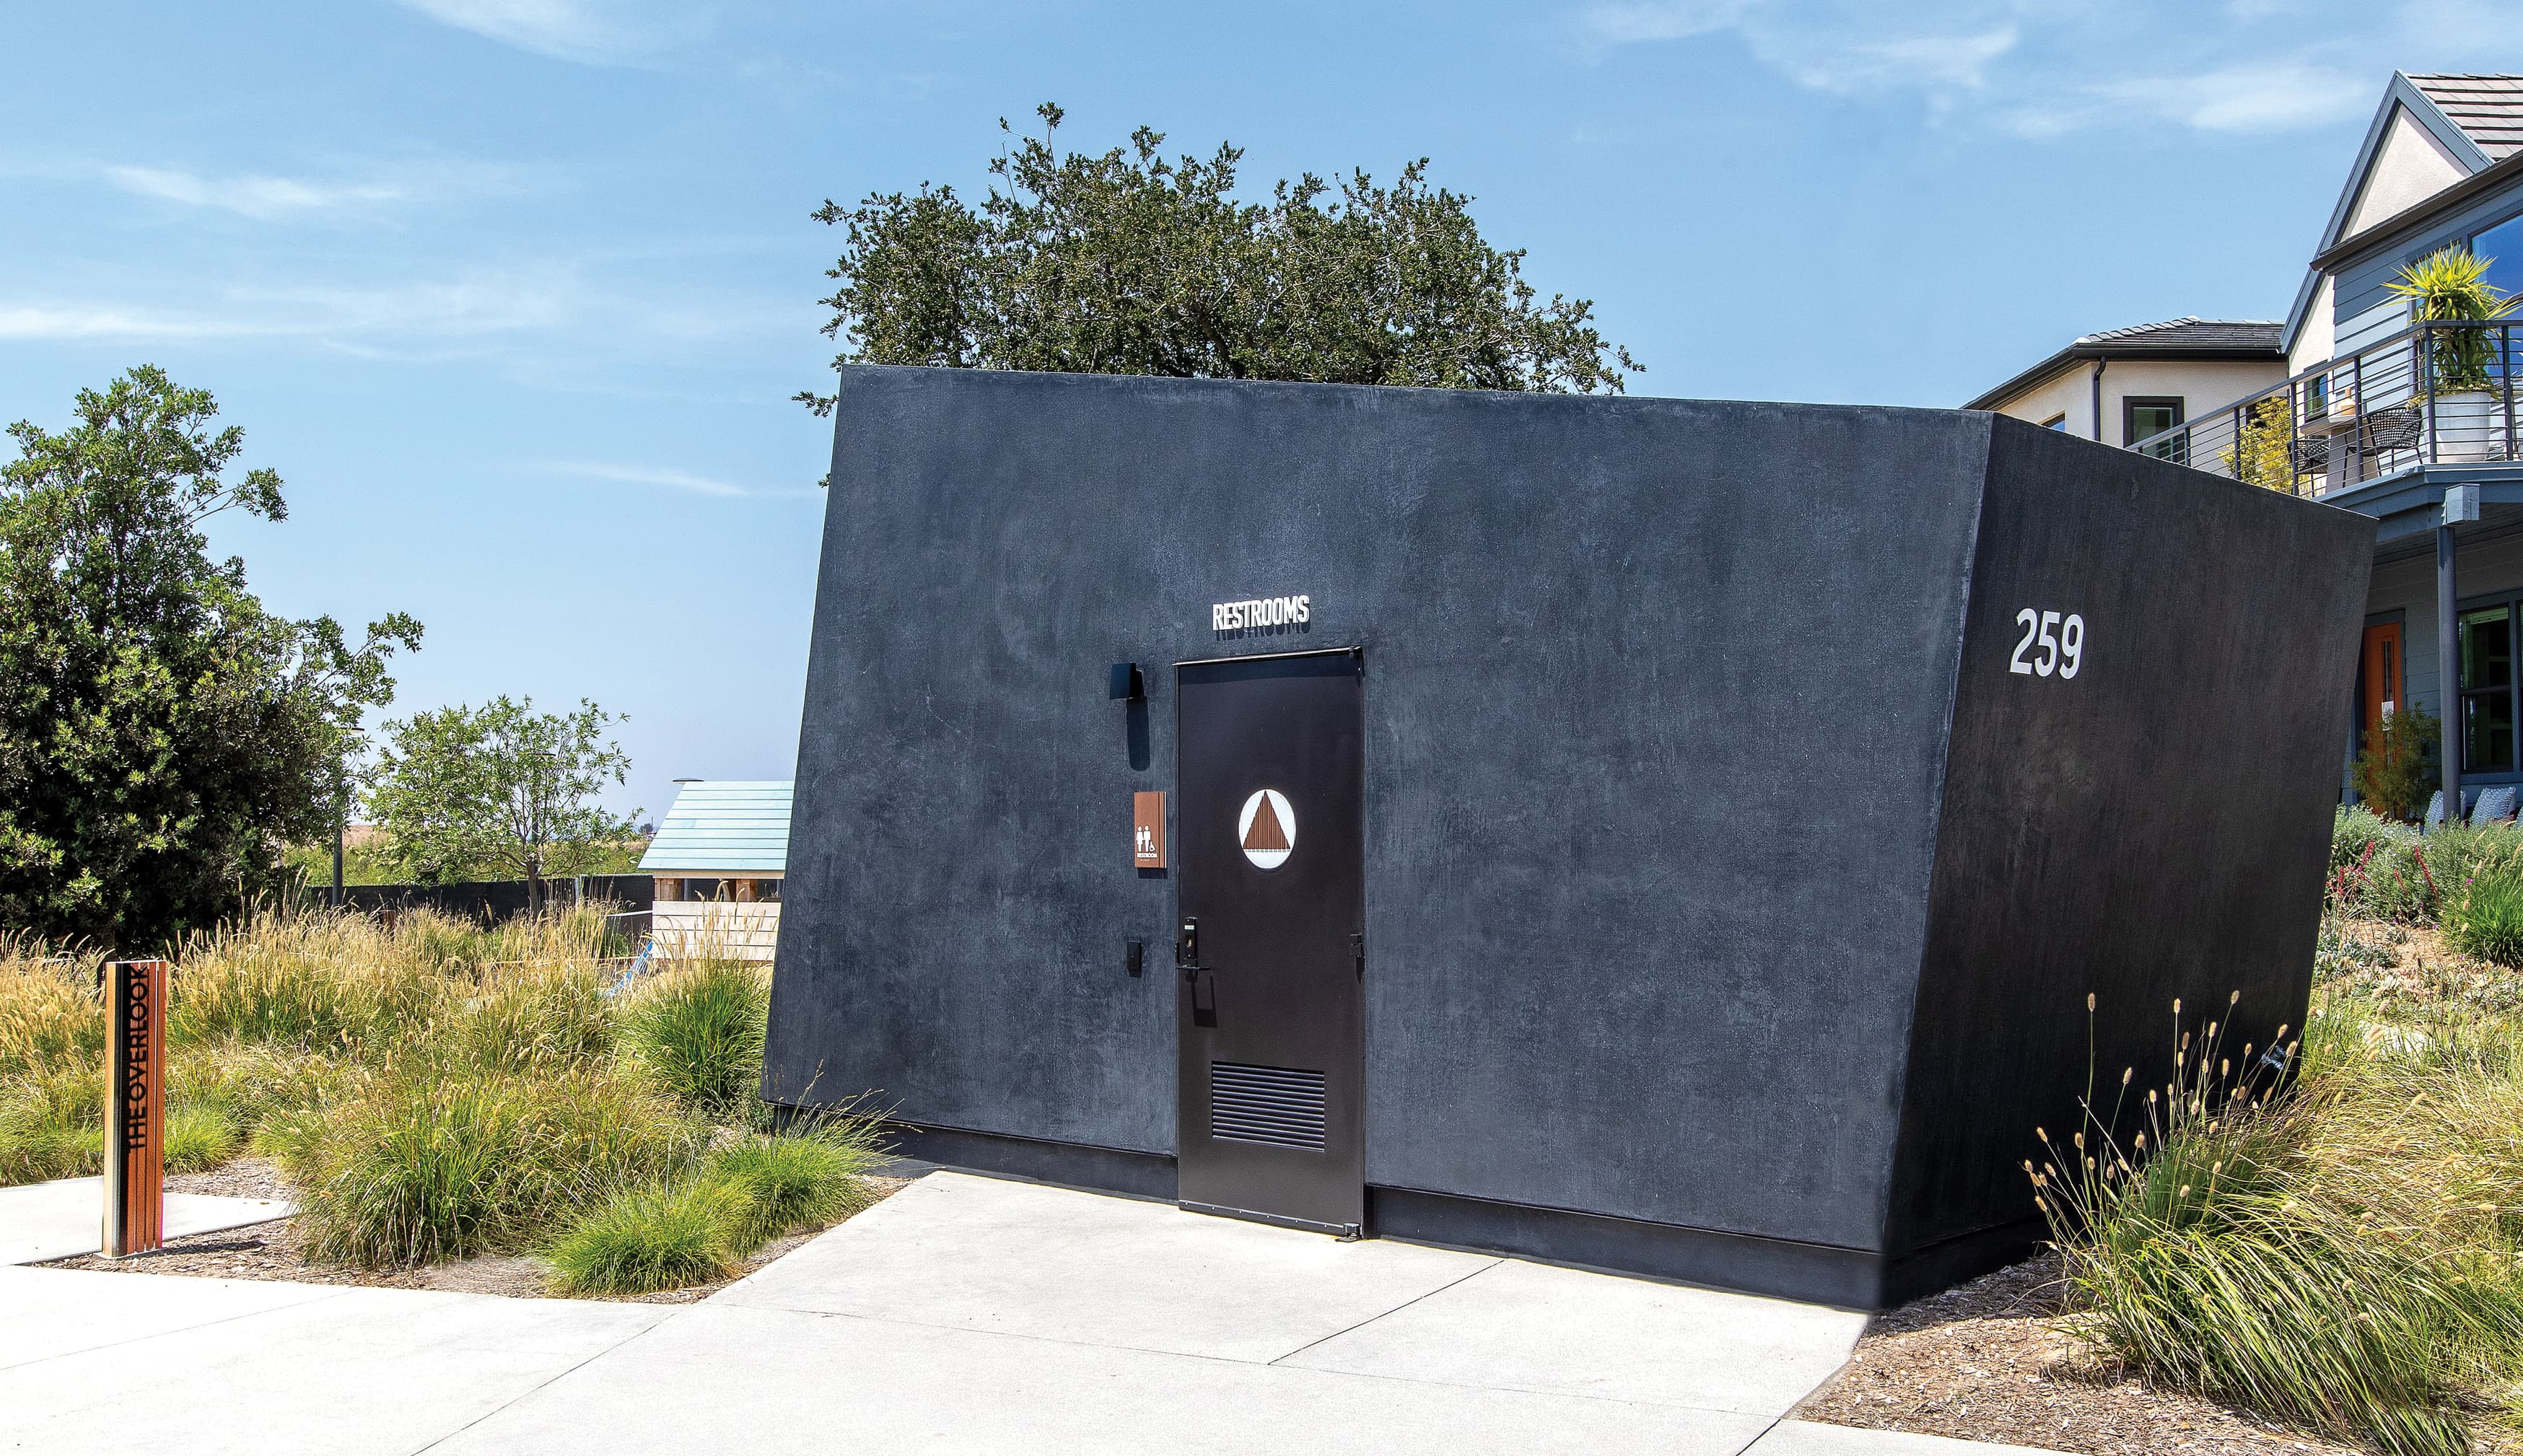 Architectural exterior restroom building. Black sleek restroom for Rise Park in Irvine, California.